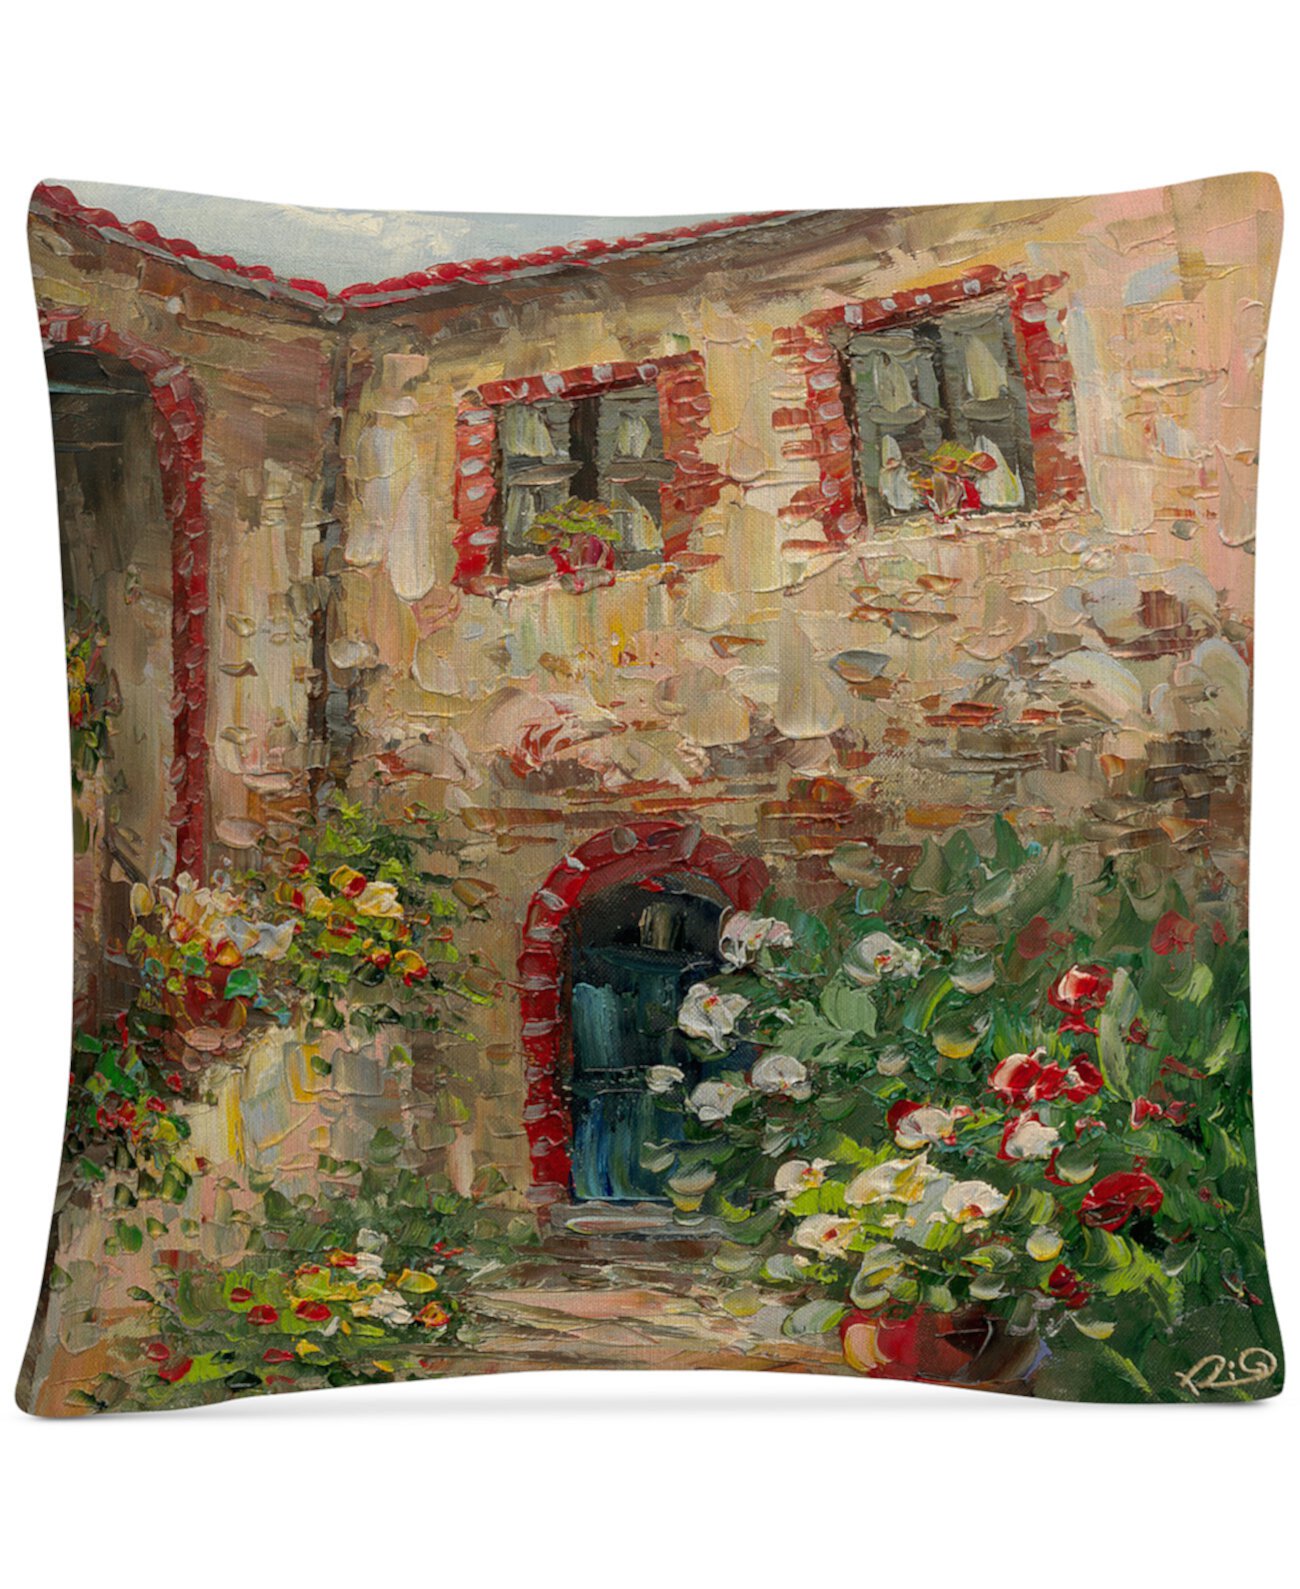 Декоративная подушка Rio Tuscany Courtyard 16 x 16 дюймов BALDWIN